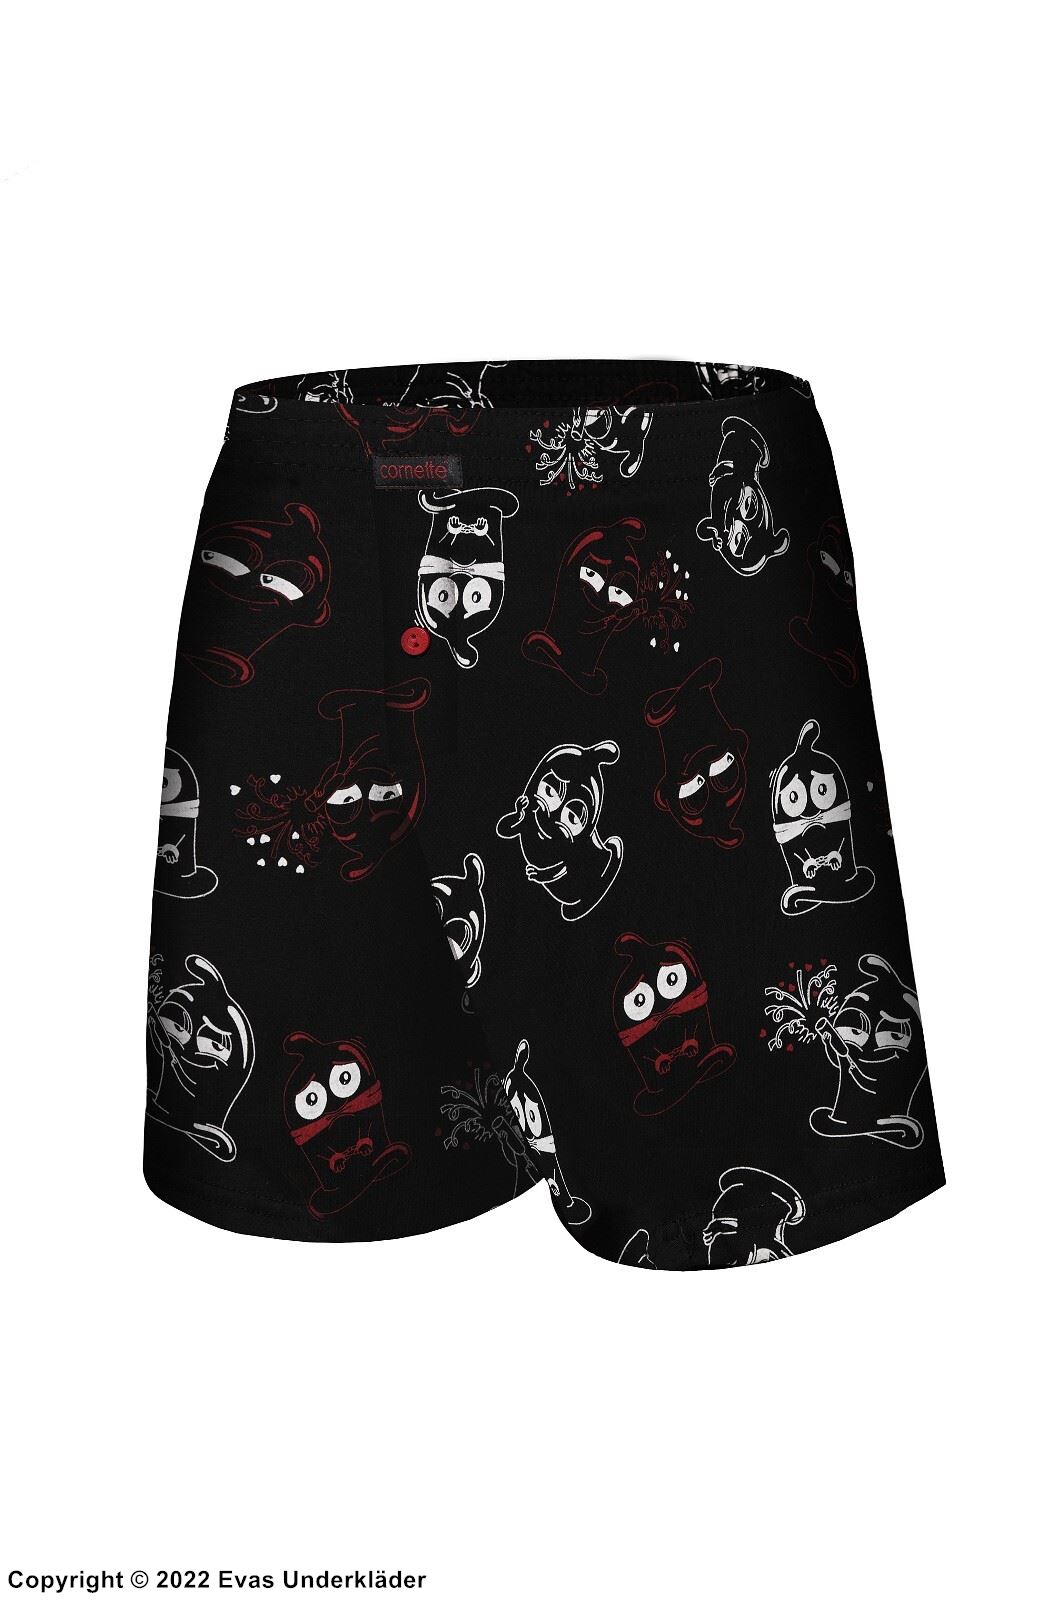 Men's boxer shorts, high quality cotton, condom-pattern